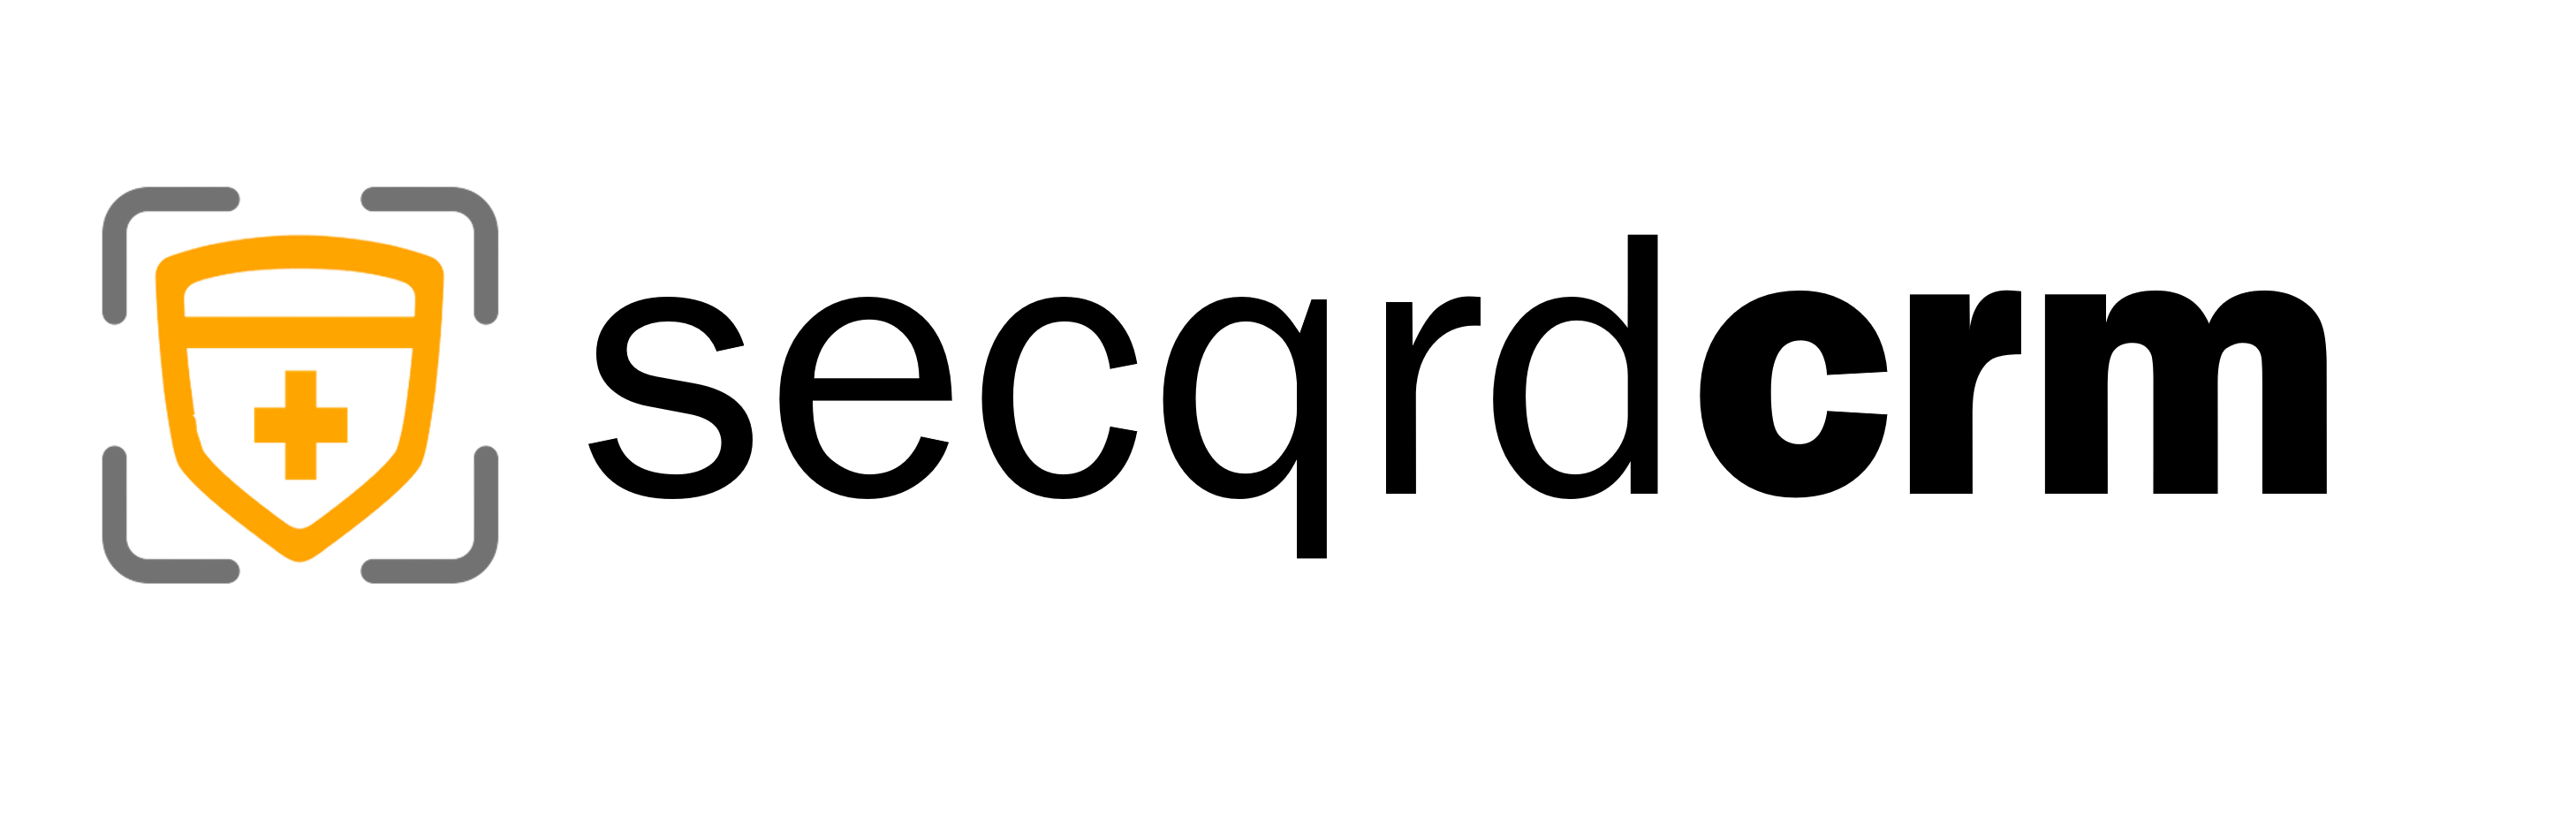 Secqrd Logo